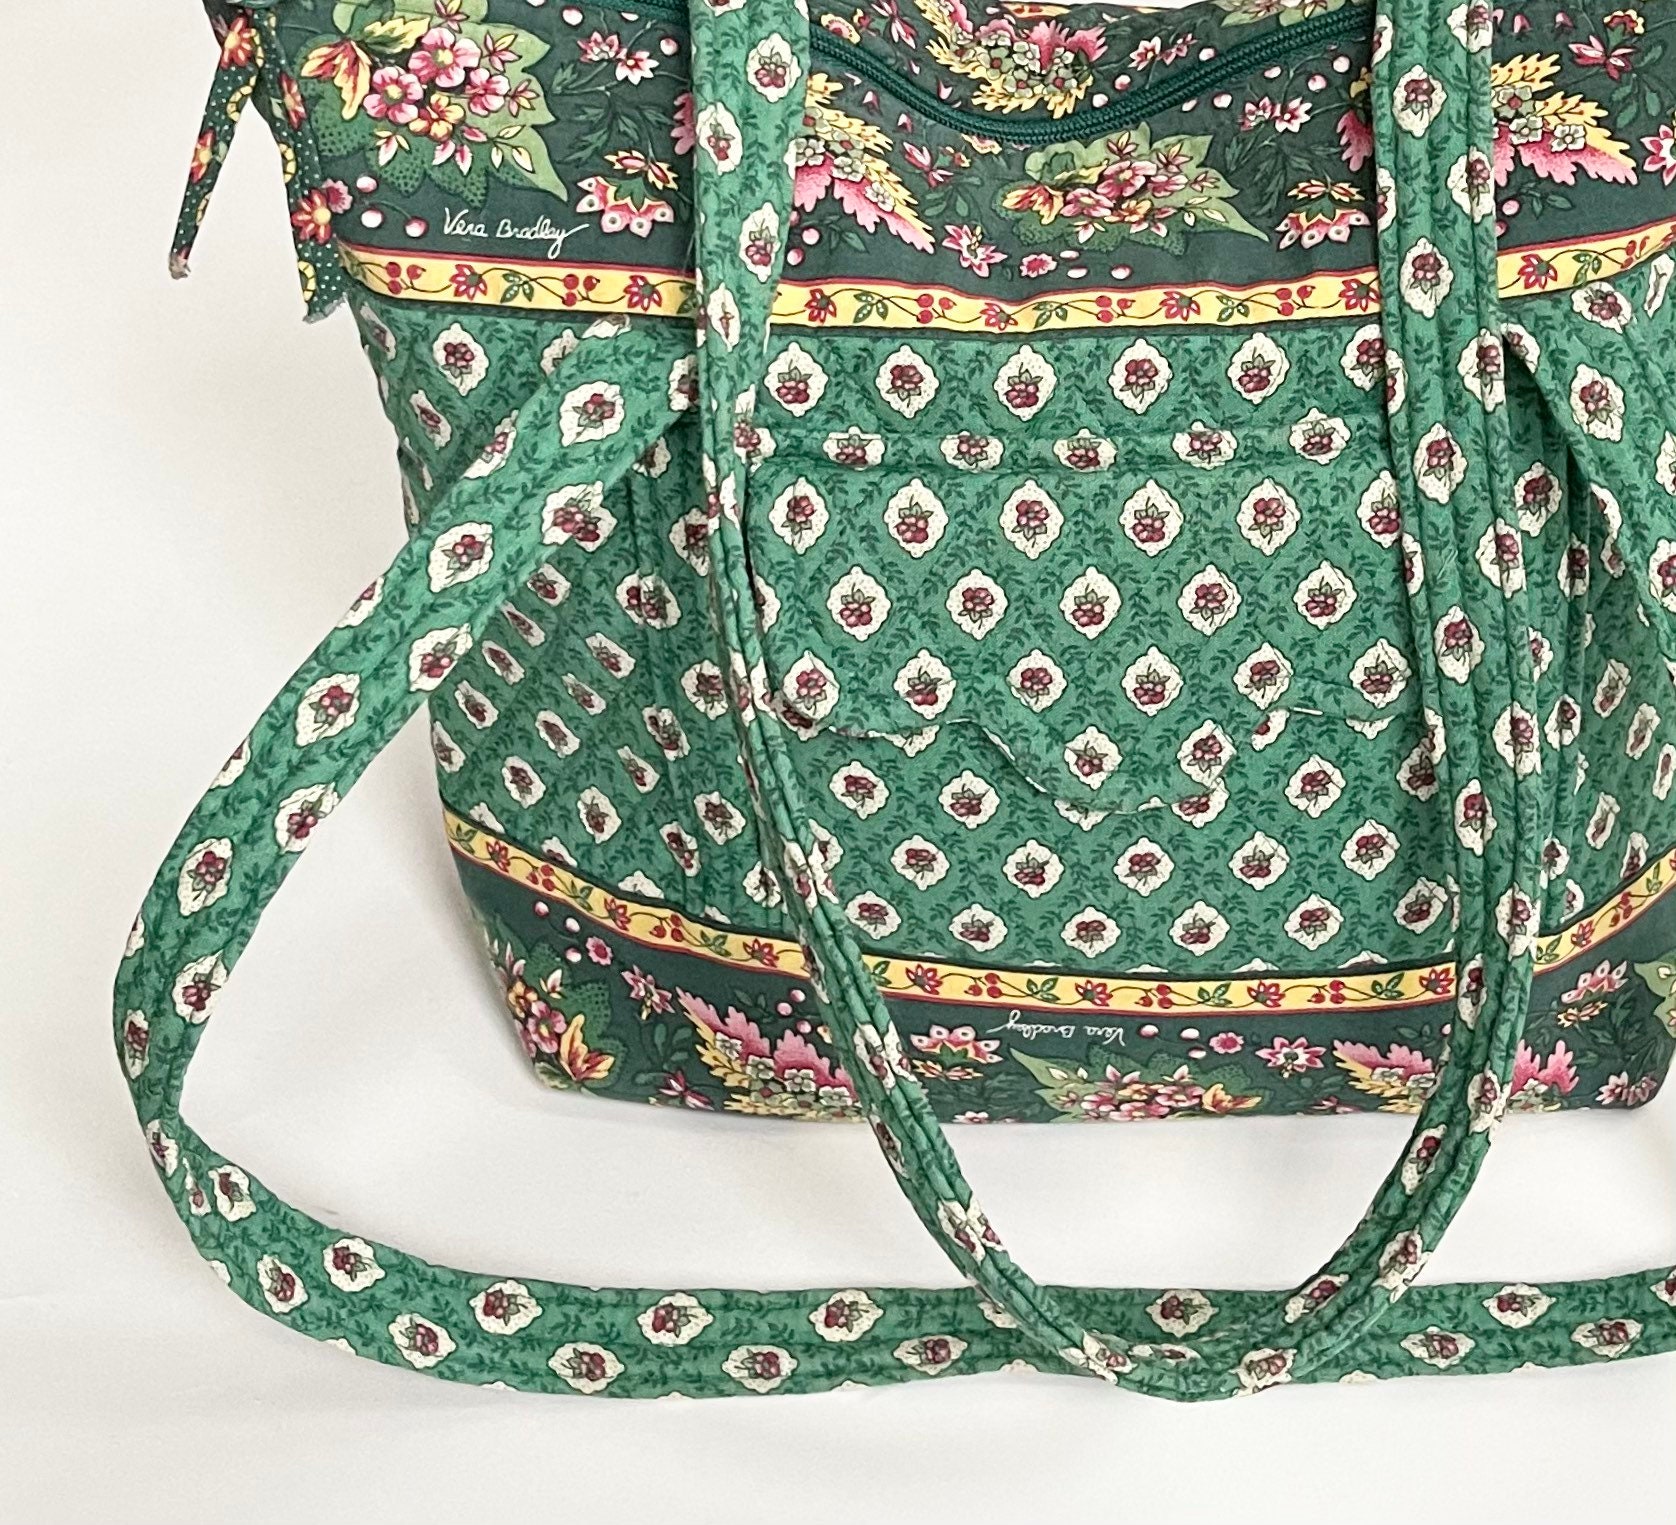 Vera Bradley Quilted Bag Purse Tote Sewing Knitting Bag Vintage Floral ...